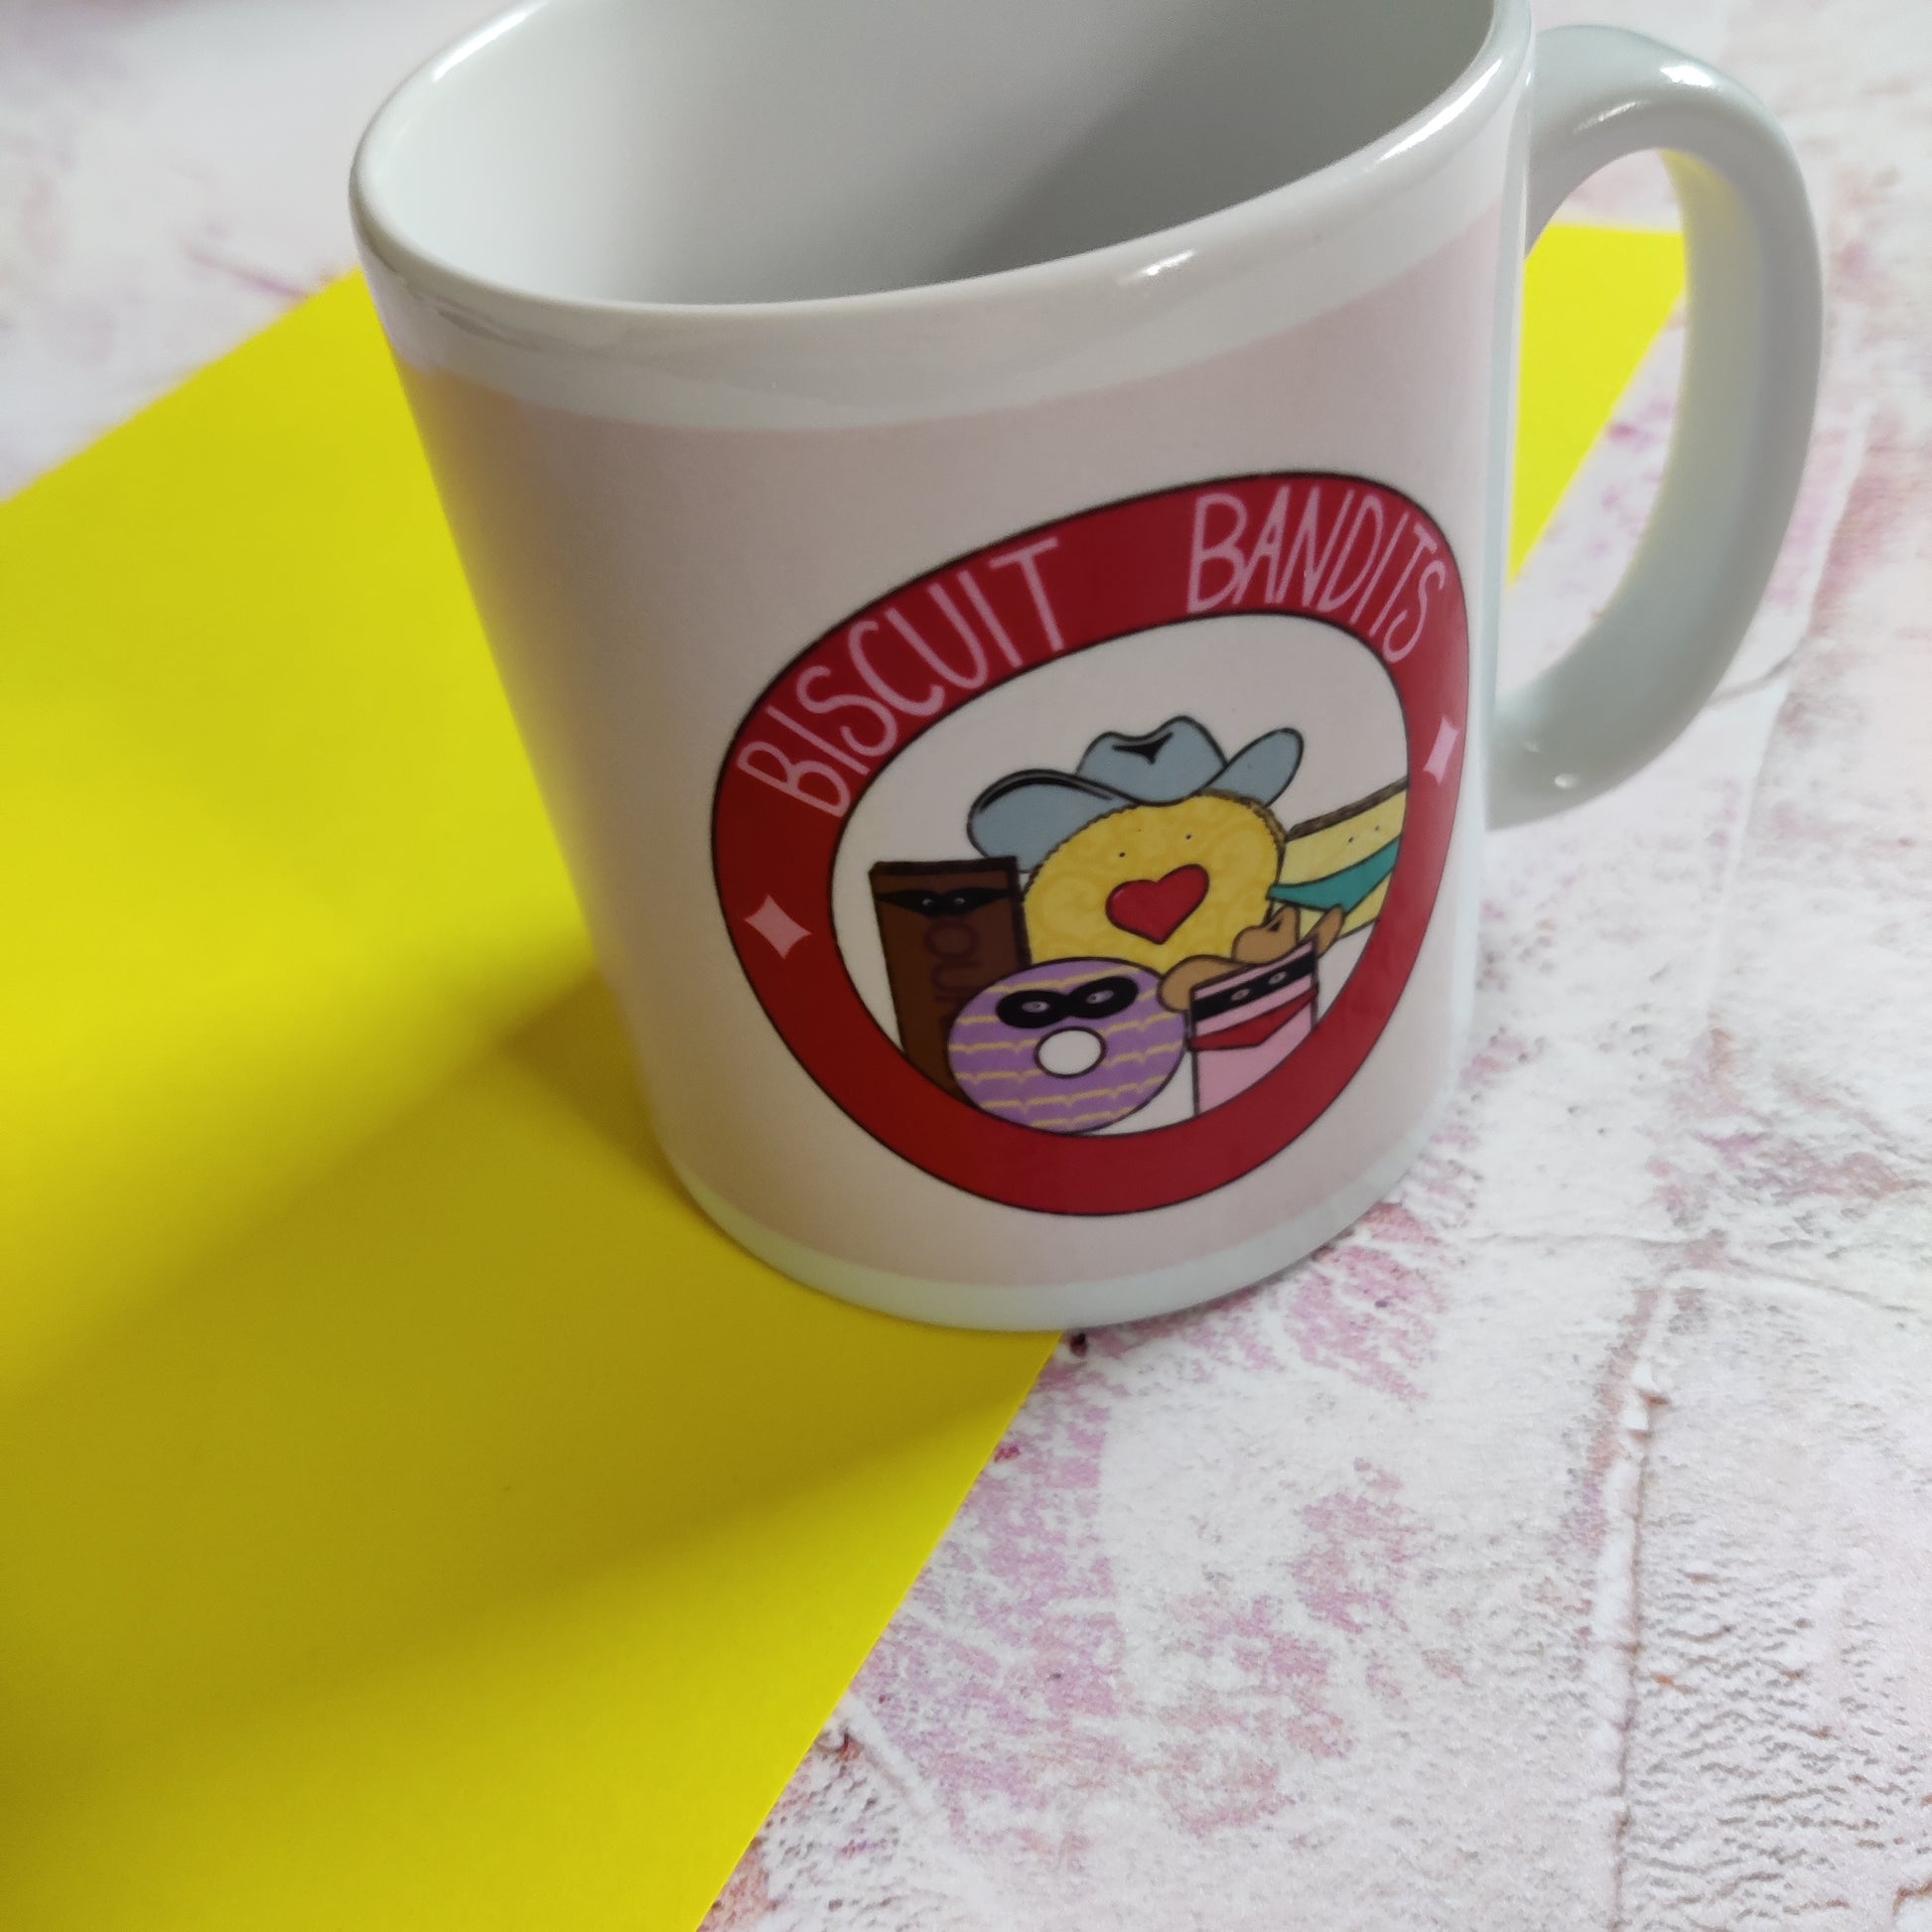 Full Colour Biscuit Bandits Mug - Fay Dixon Design